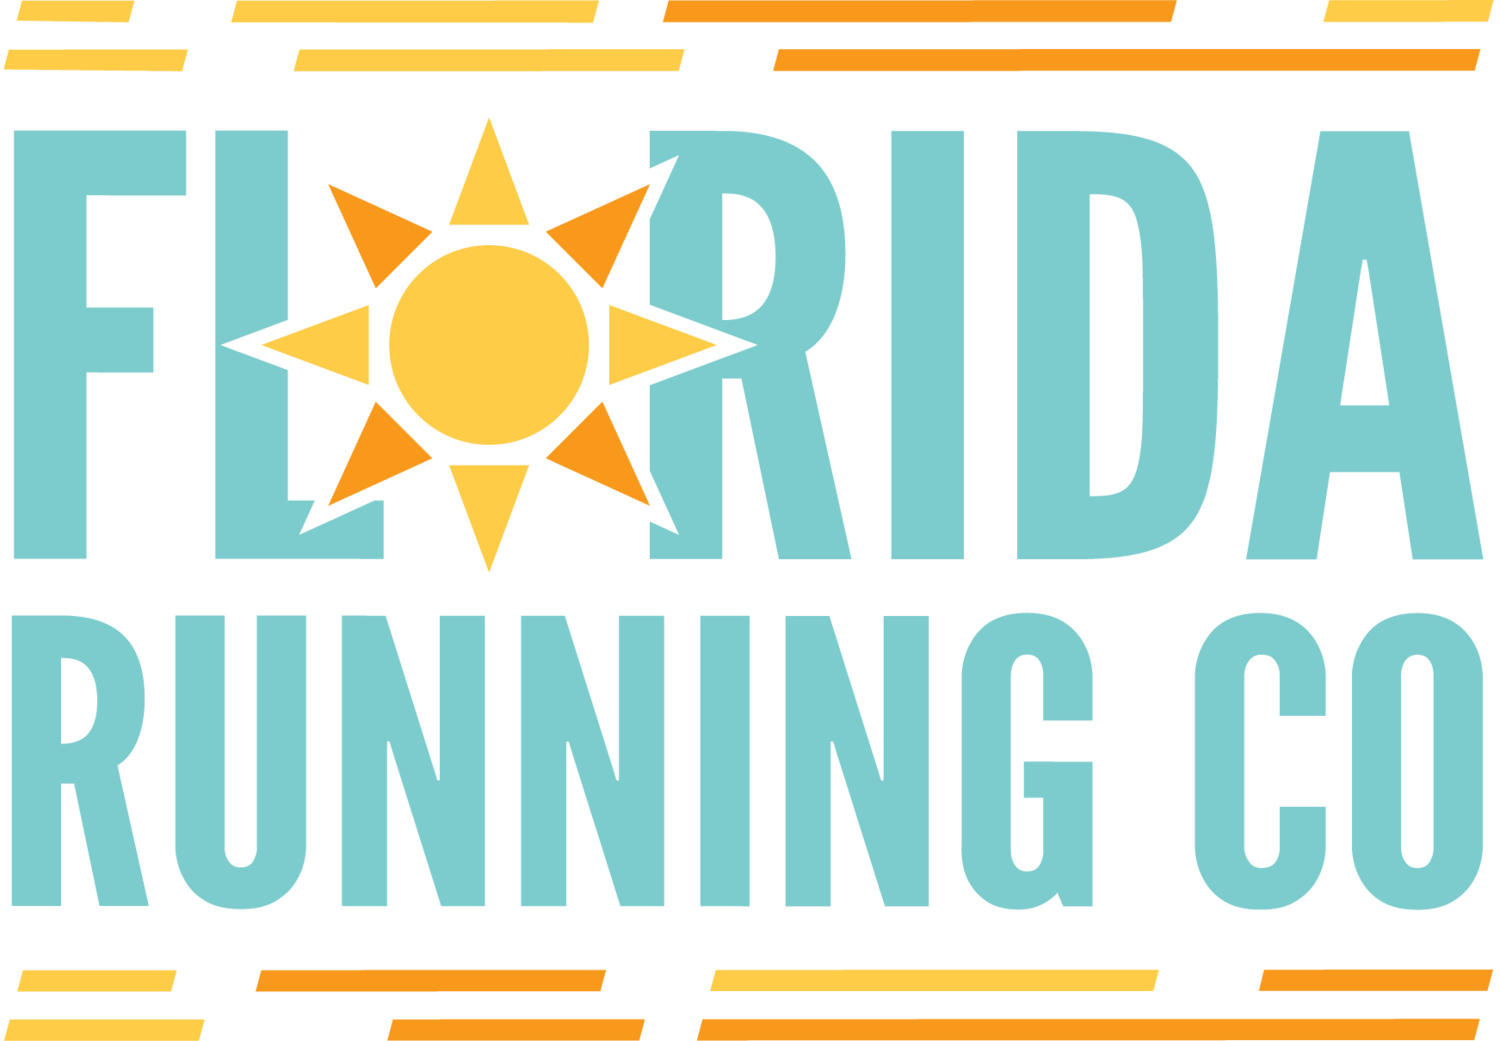 RACES — FLORIDA RUNNING CO.